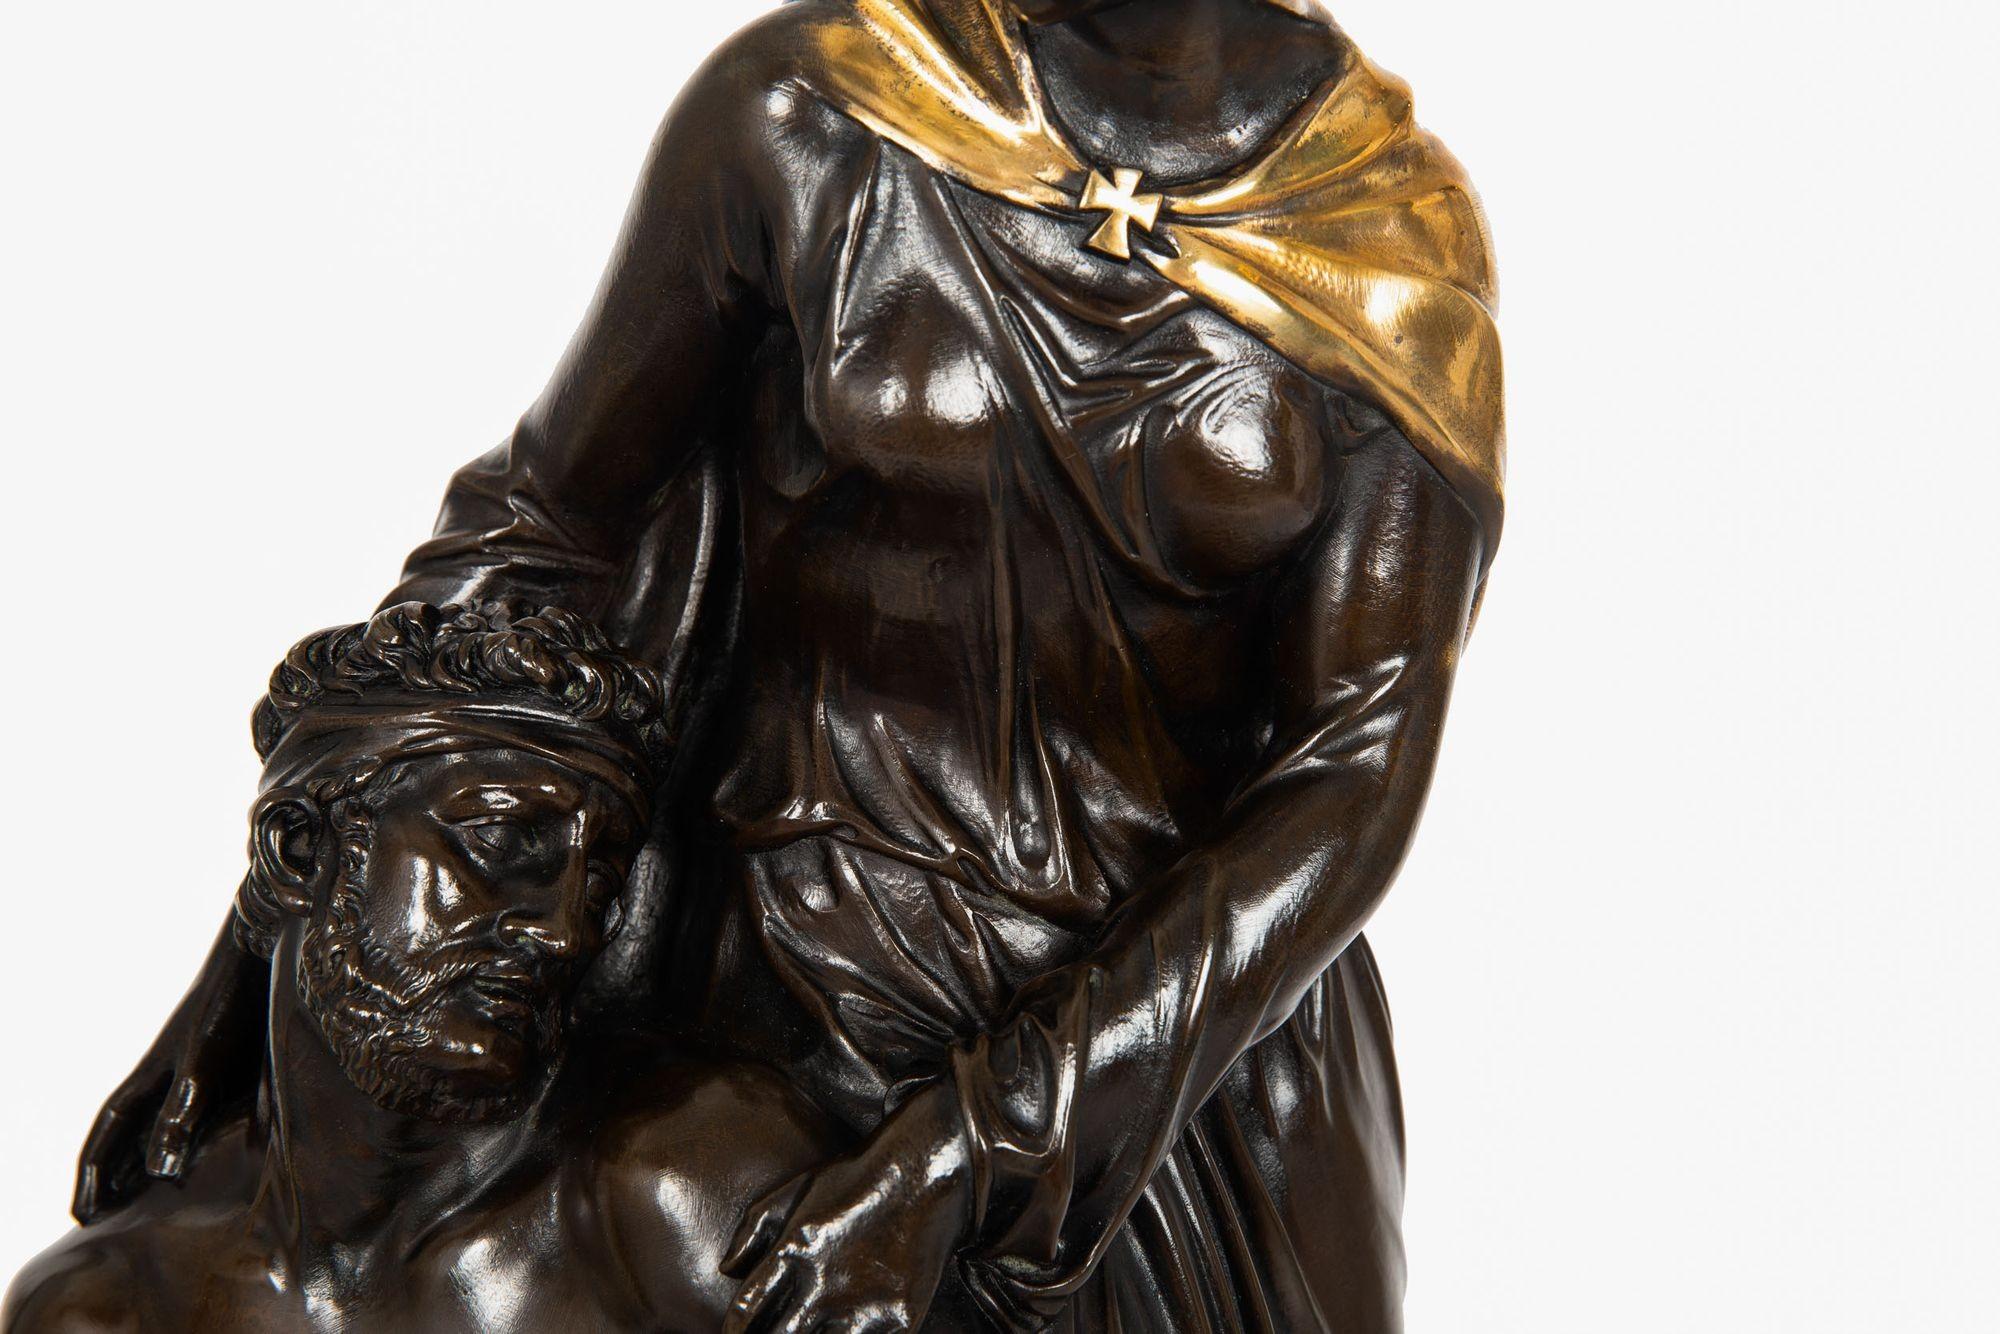 English Bronze Sculpture “Mercy on Battlefield” (1856), Edward Bowring Stephens 2